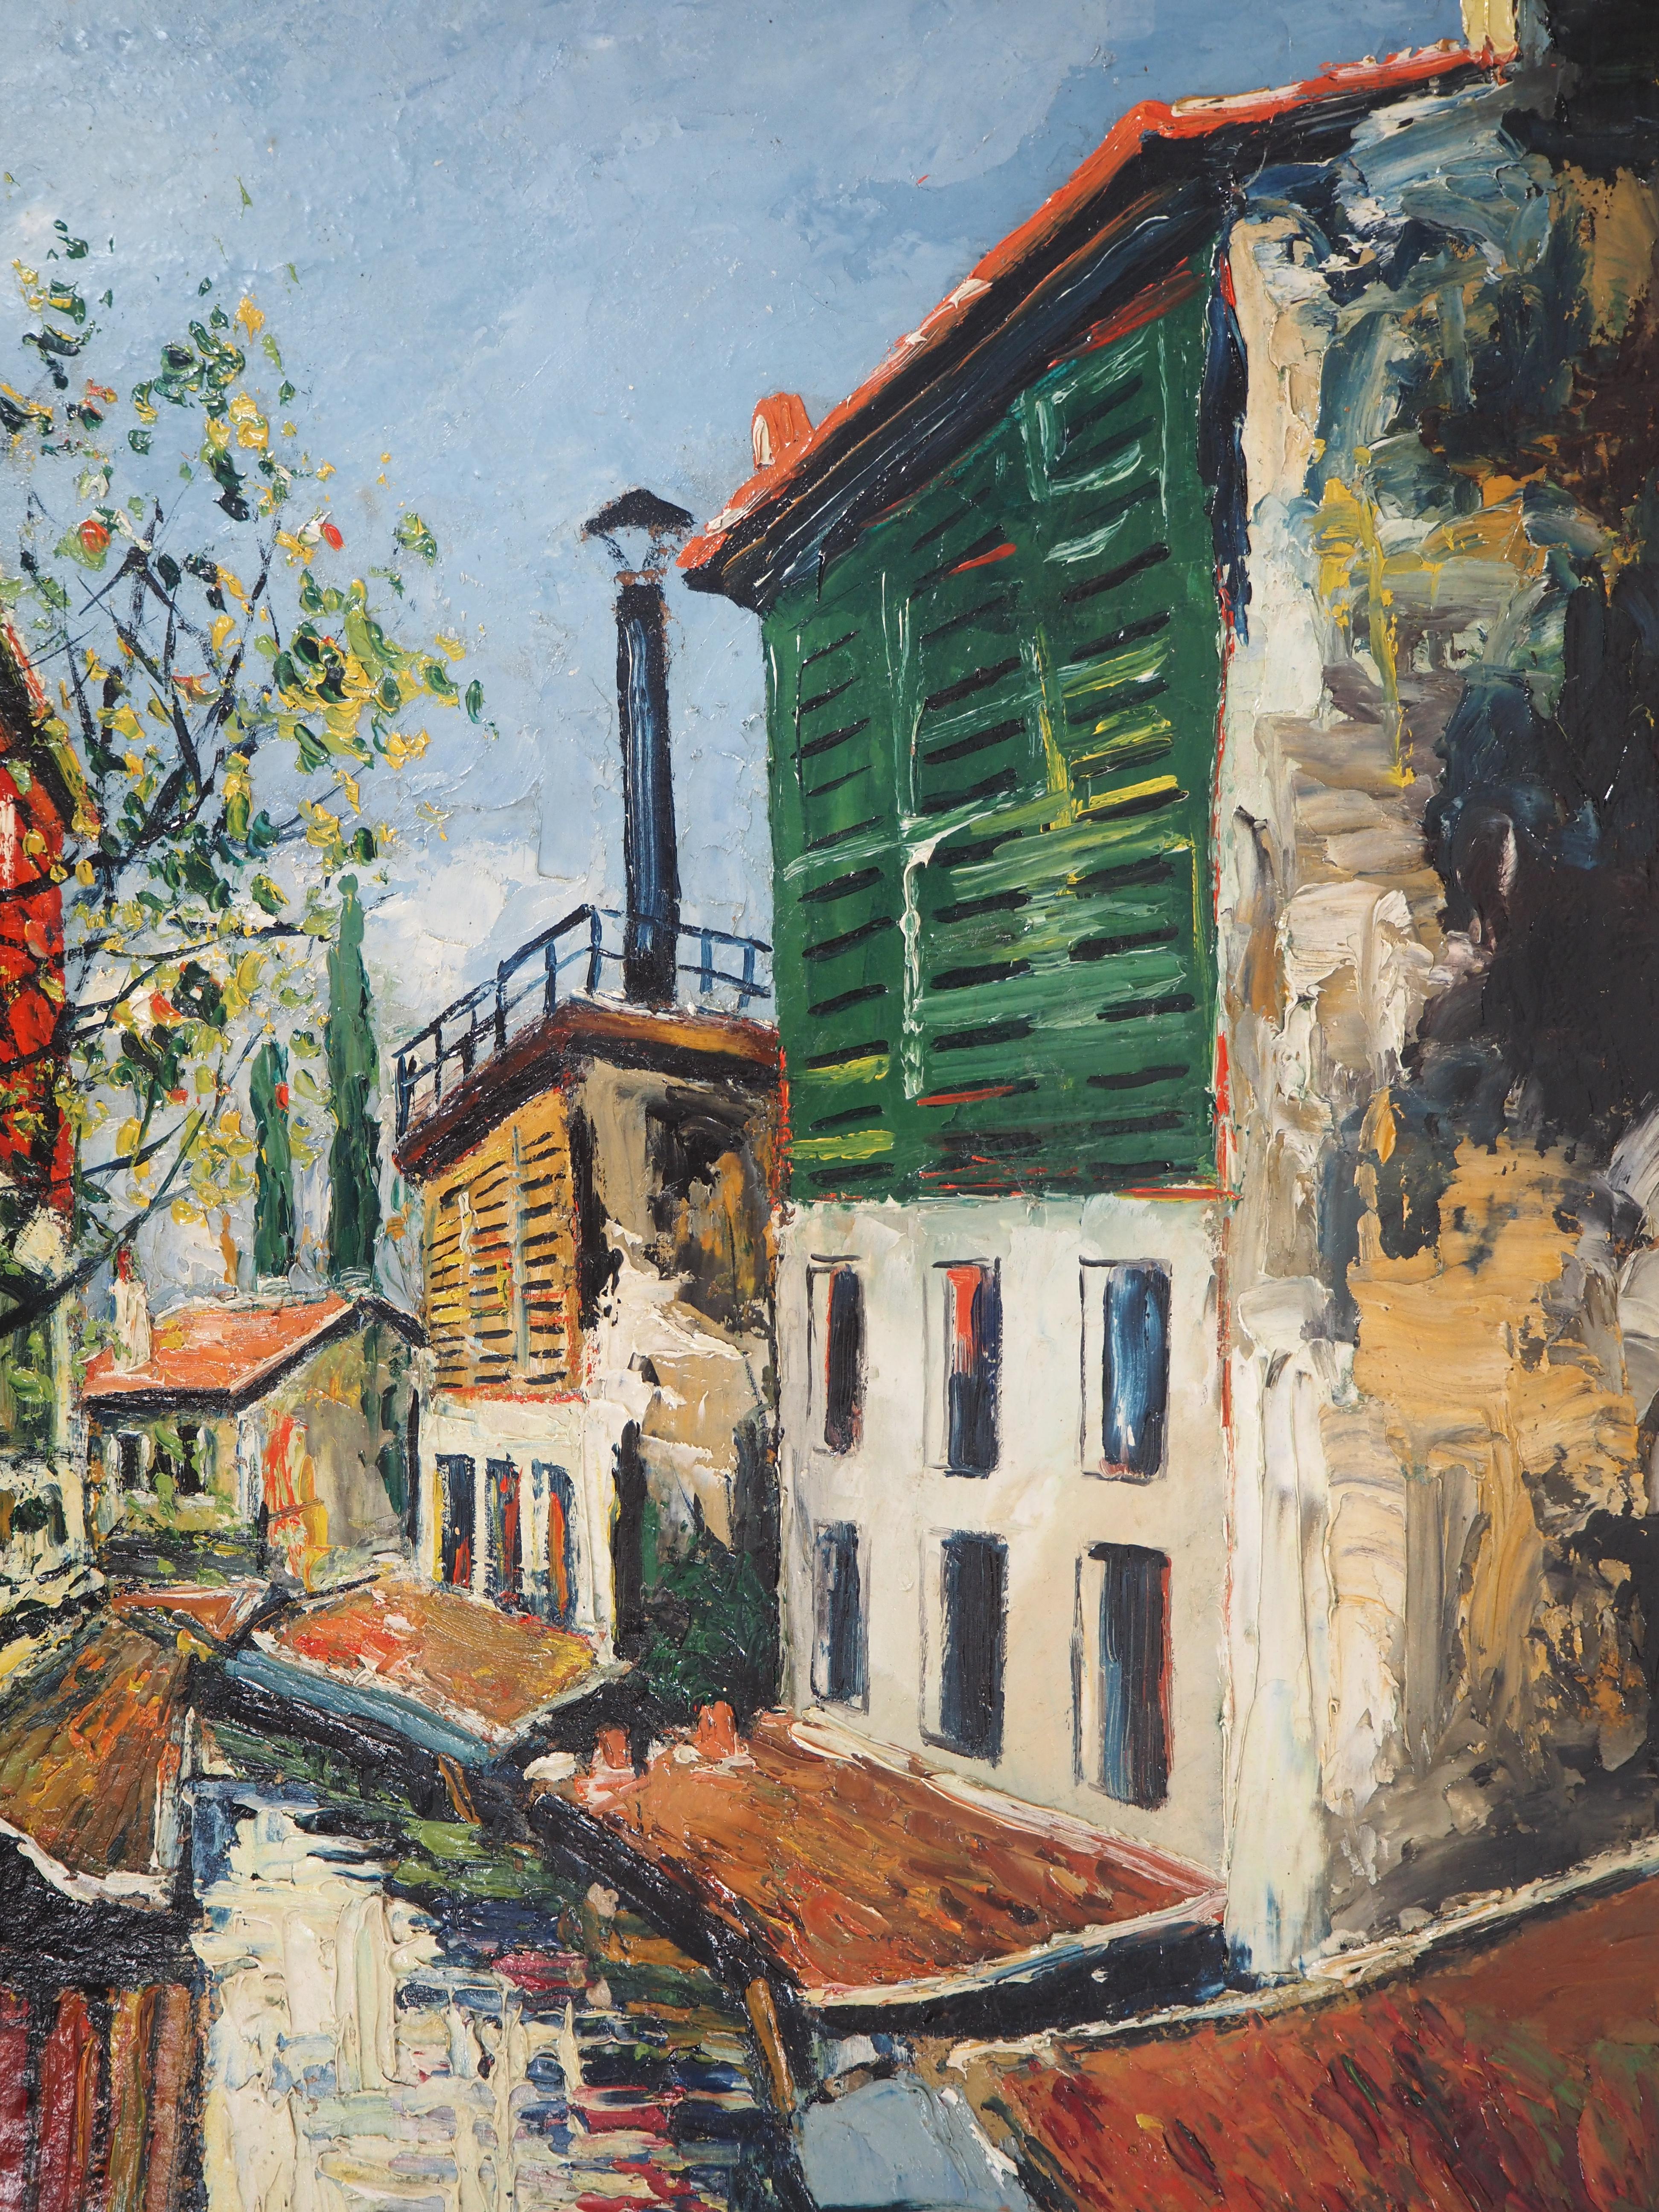 Paris : Small Houses Near Bievre River - Original oil on panel - Signed - Post-Impressionist Painting by Elisée Maclet